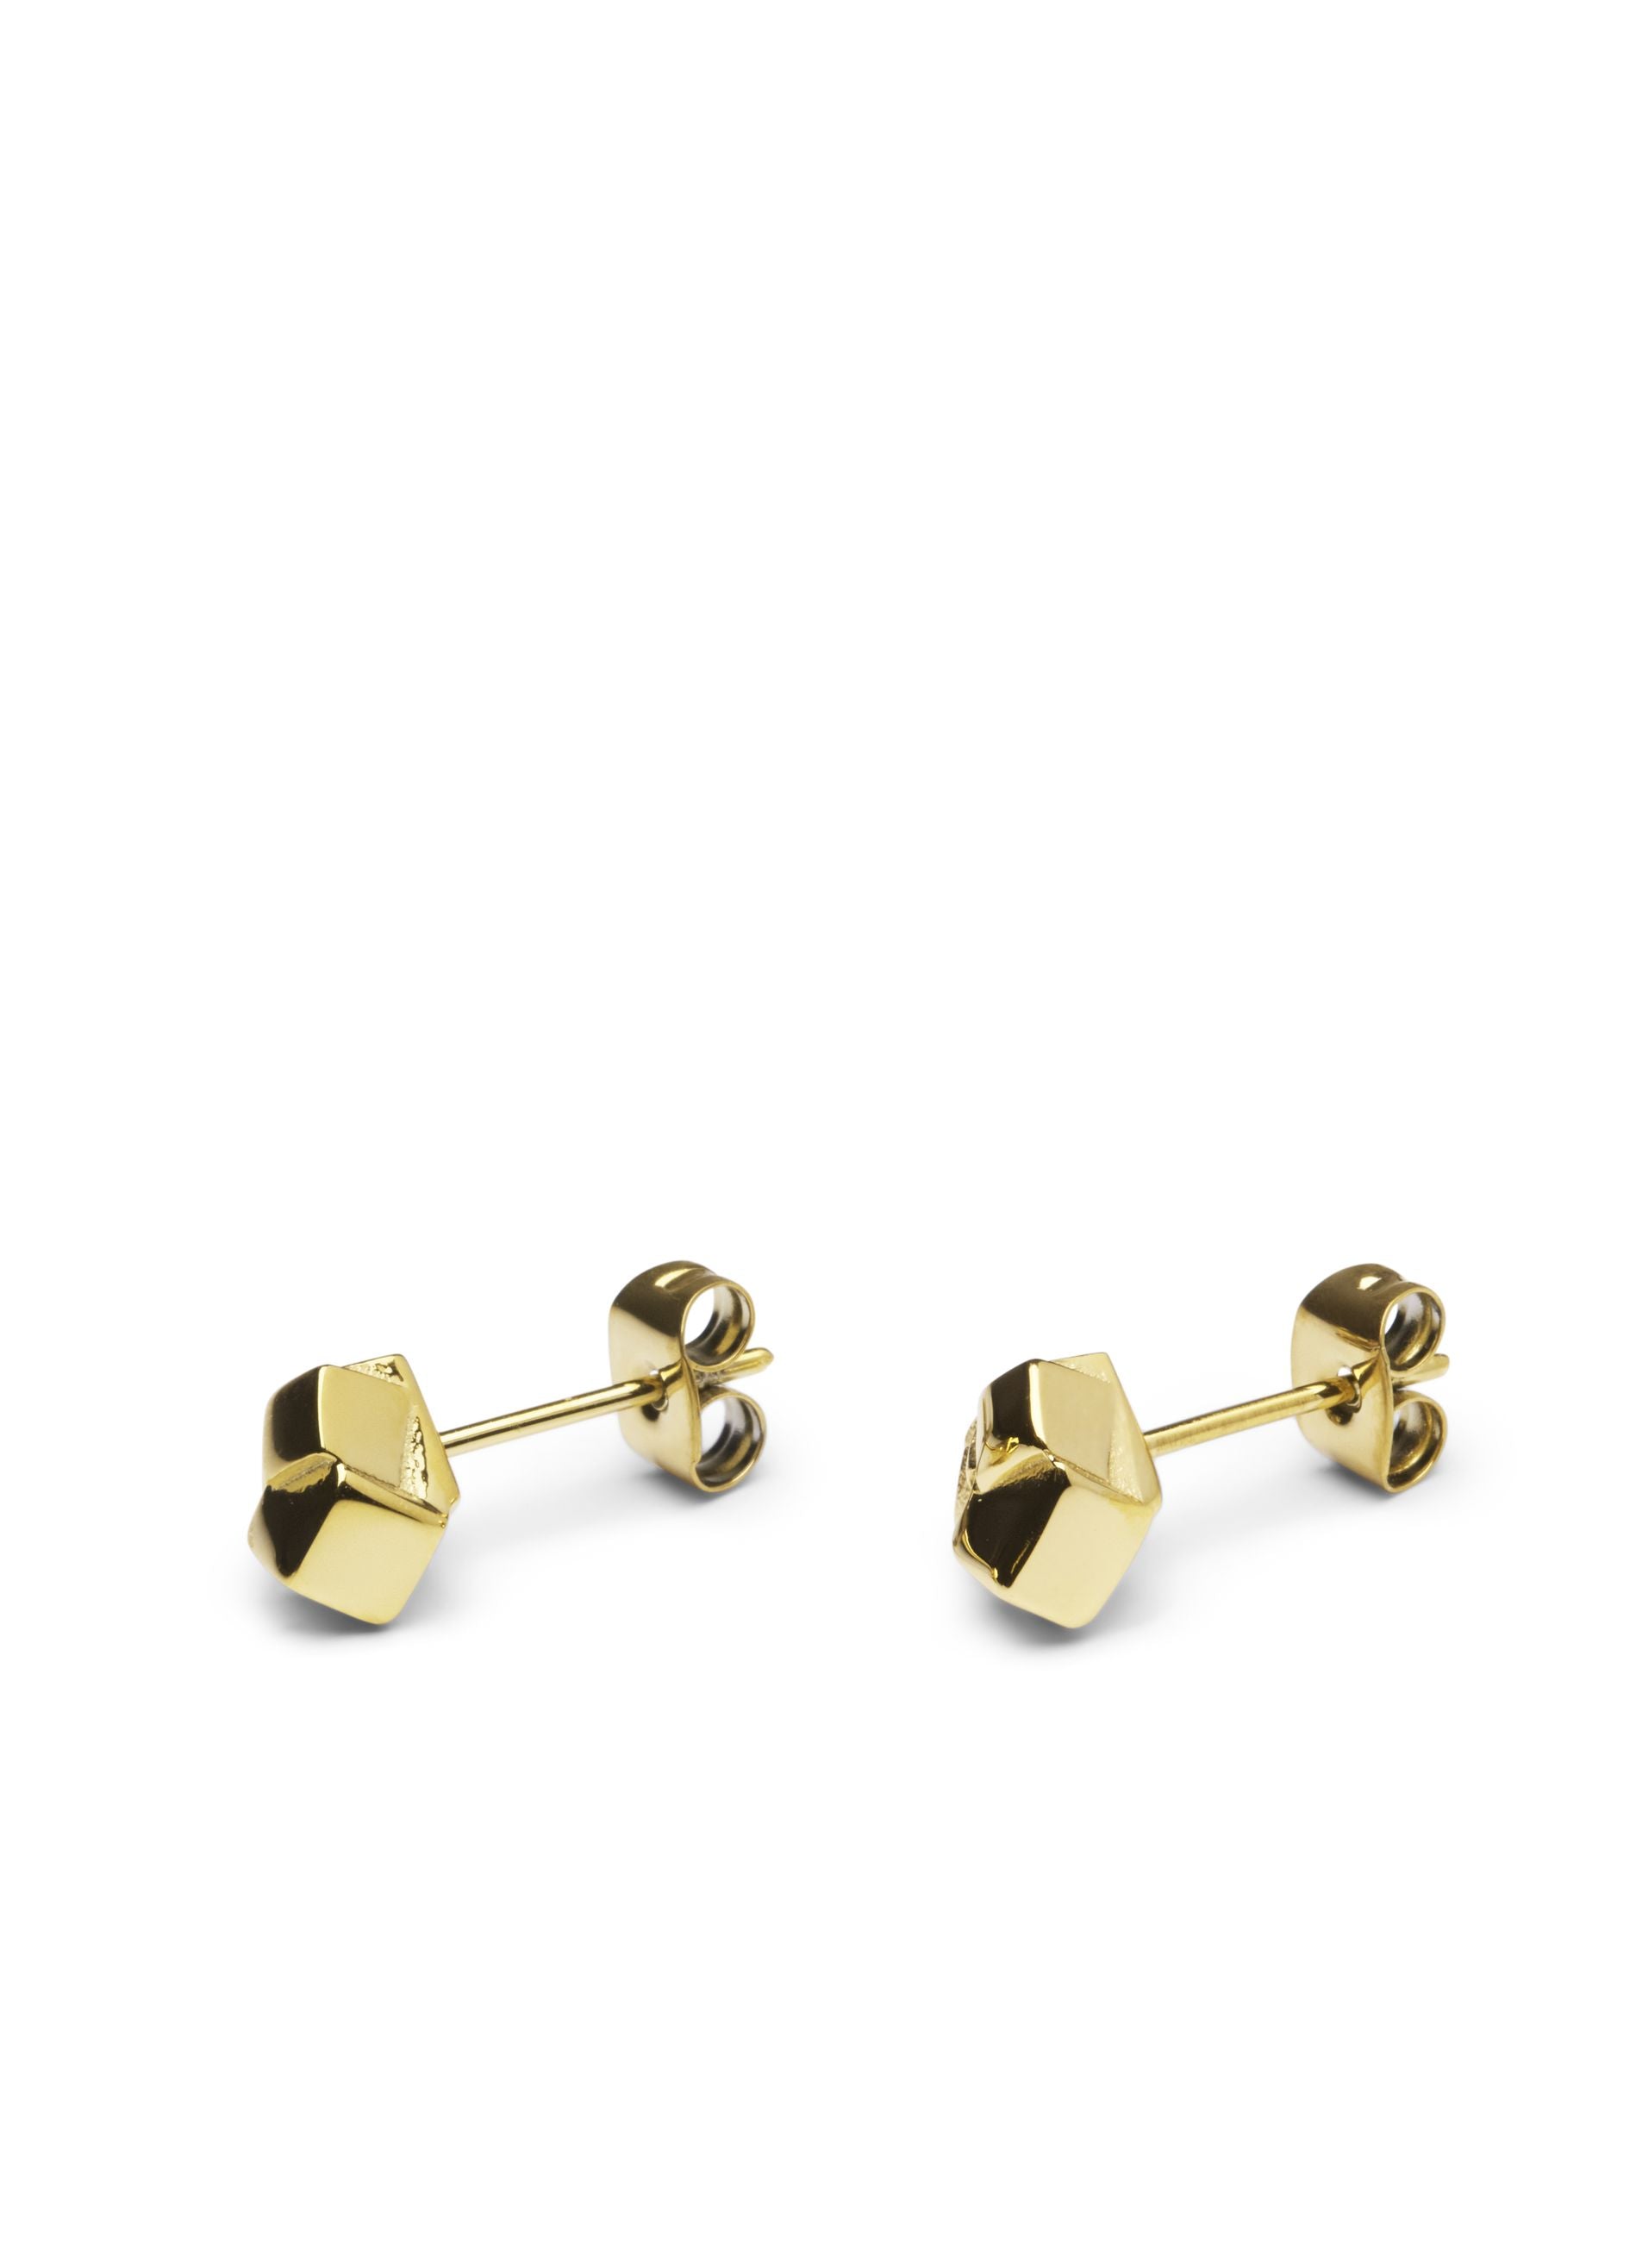 Skultuna Morph Mini Earrings, Gold Plated